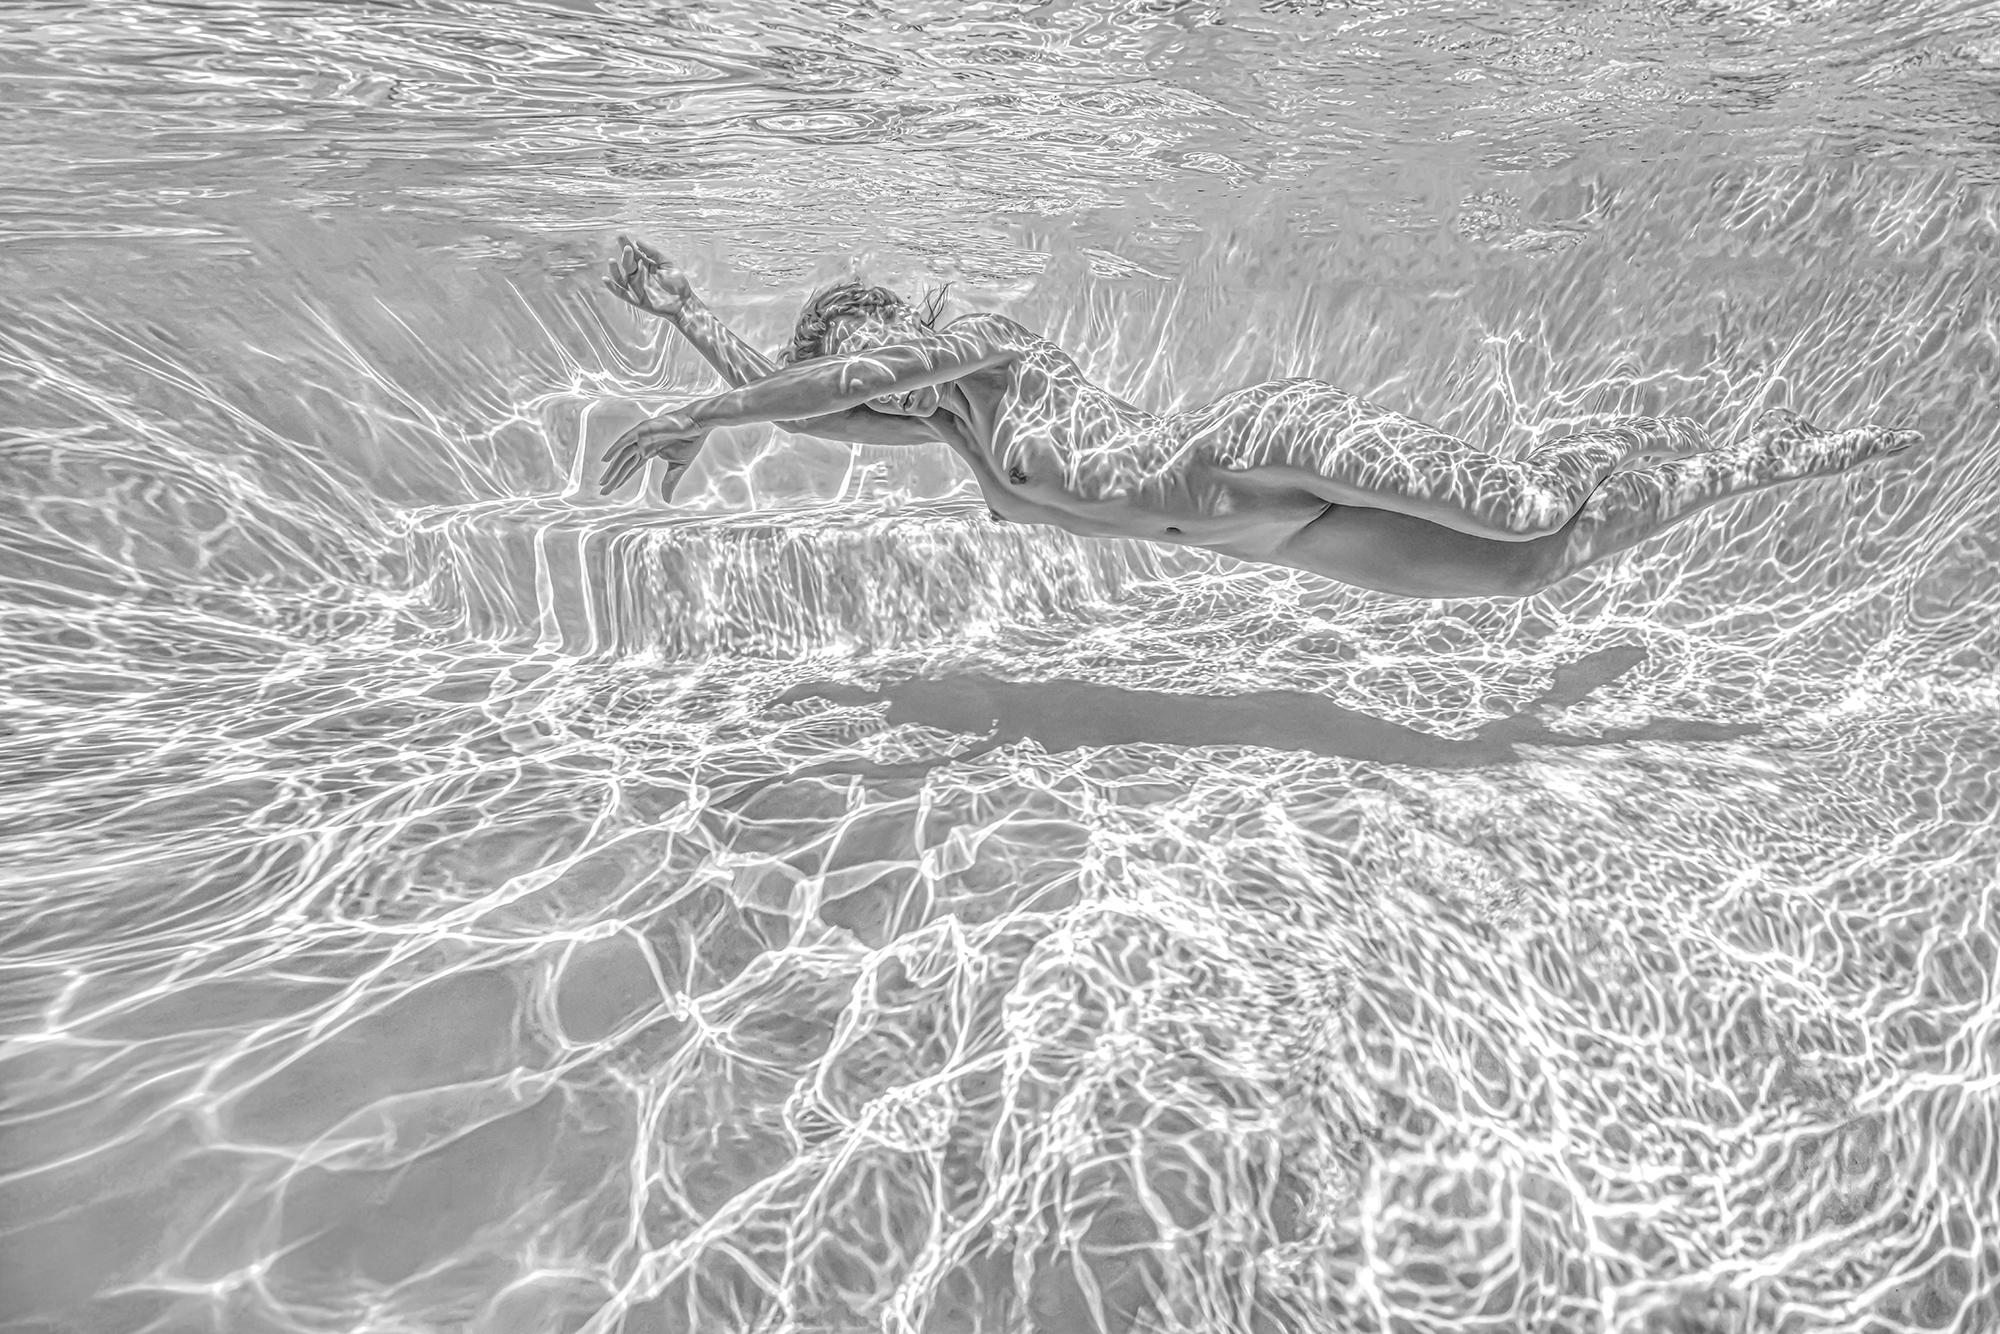 Thunderweb - underwater black & white nude photograph - print on paper 36" x 54"